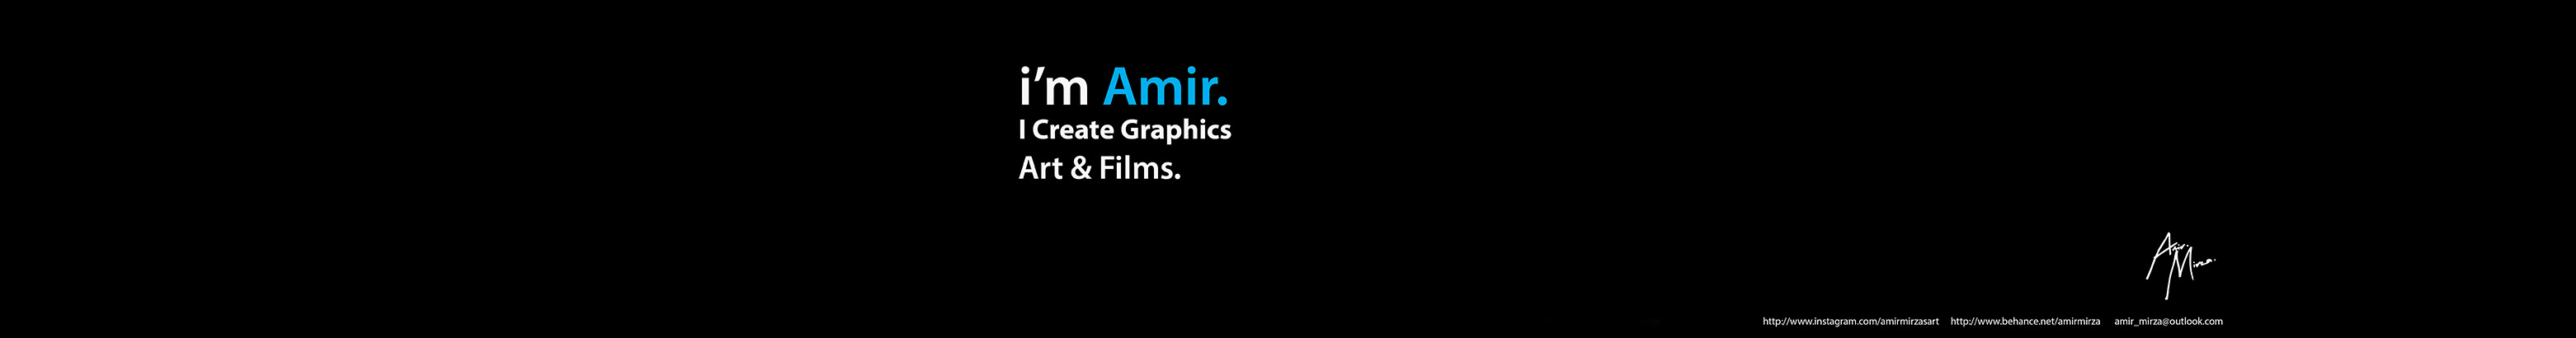 Amir Mirzas profilbanner